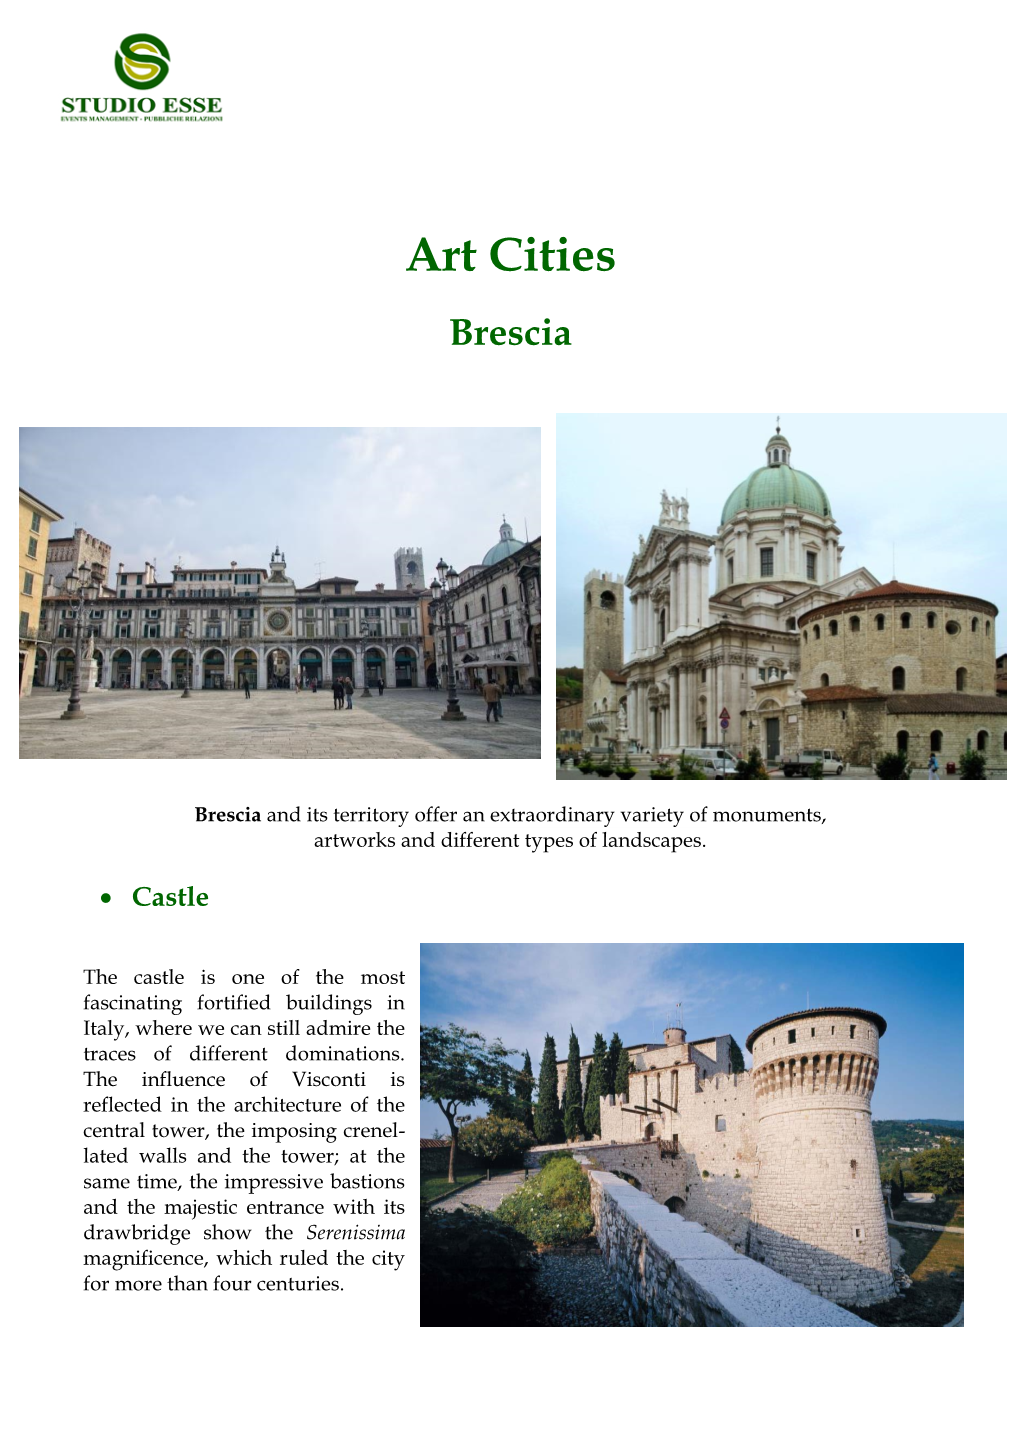 Art Cities Brescia